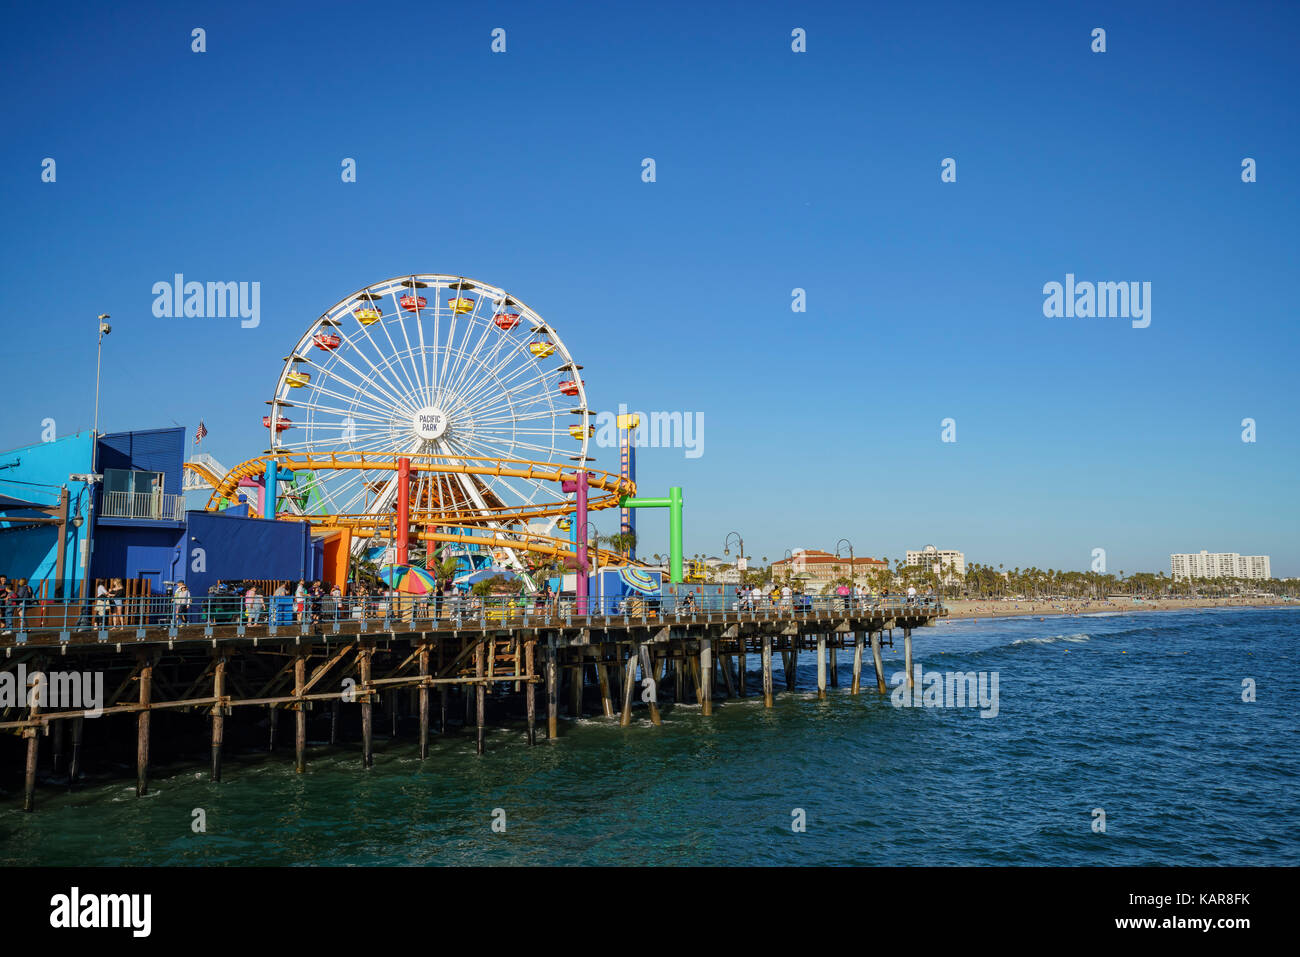 Santa Monica, JUN 21: The amusement park of the pier on JUN 21, 2017 at Los Angeles County, California, United States Stock Photo